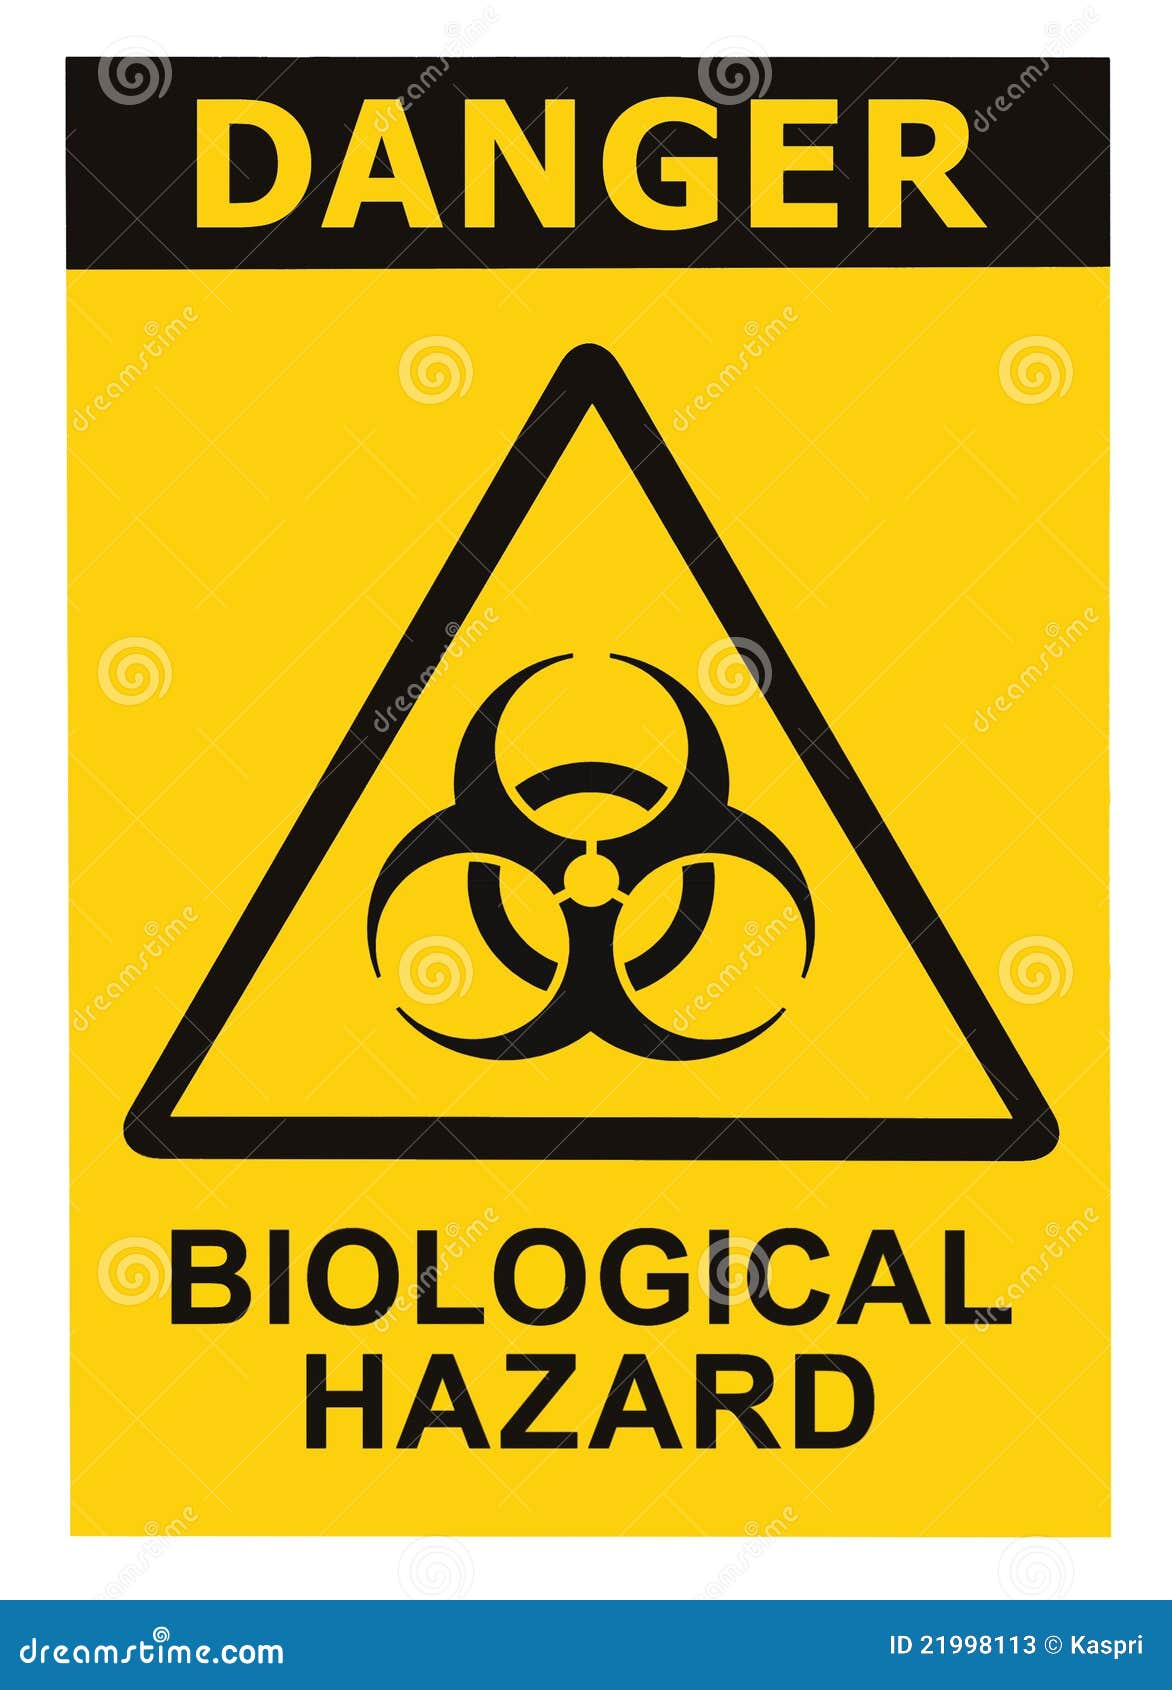 biohazard-symbol-sign-biological-threat-